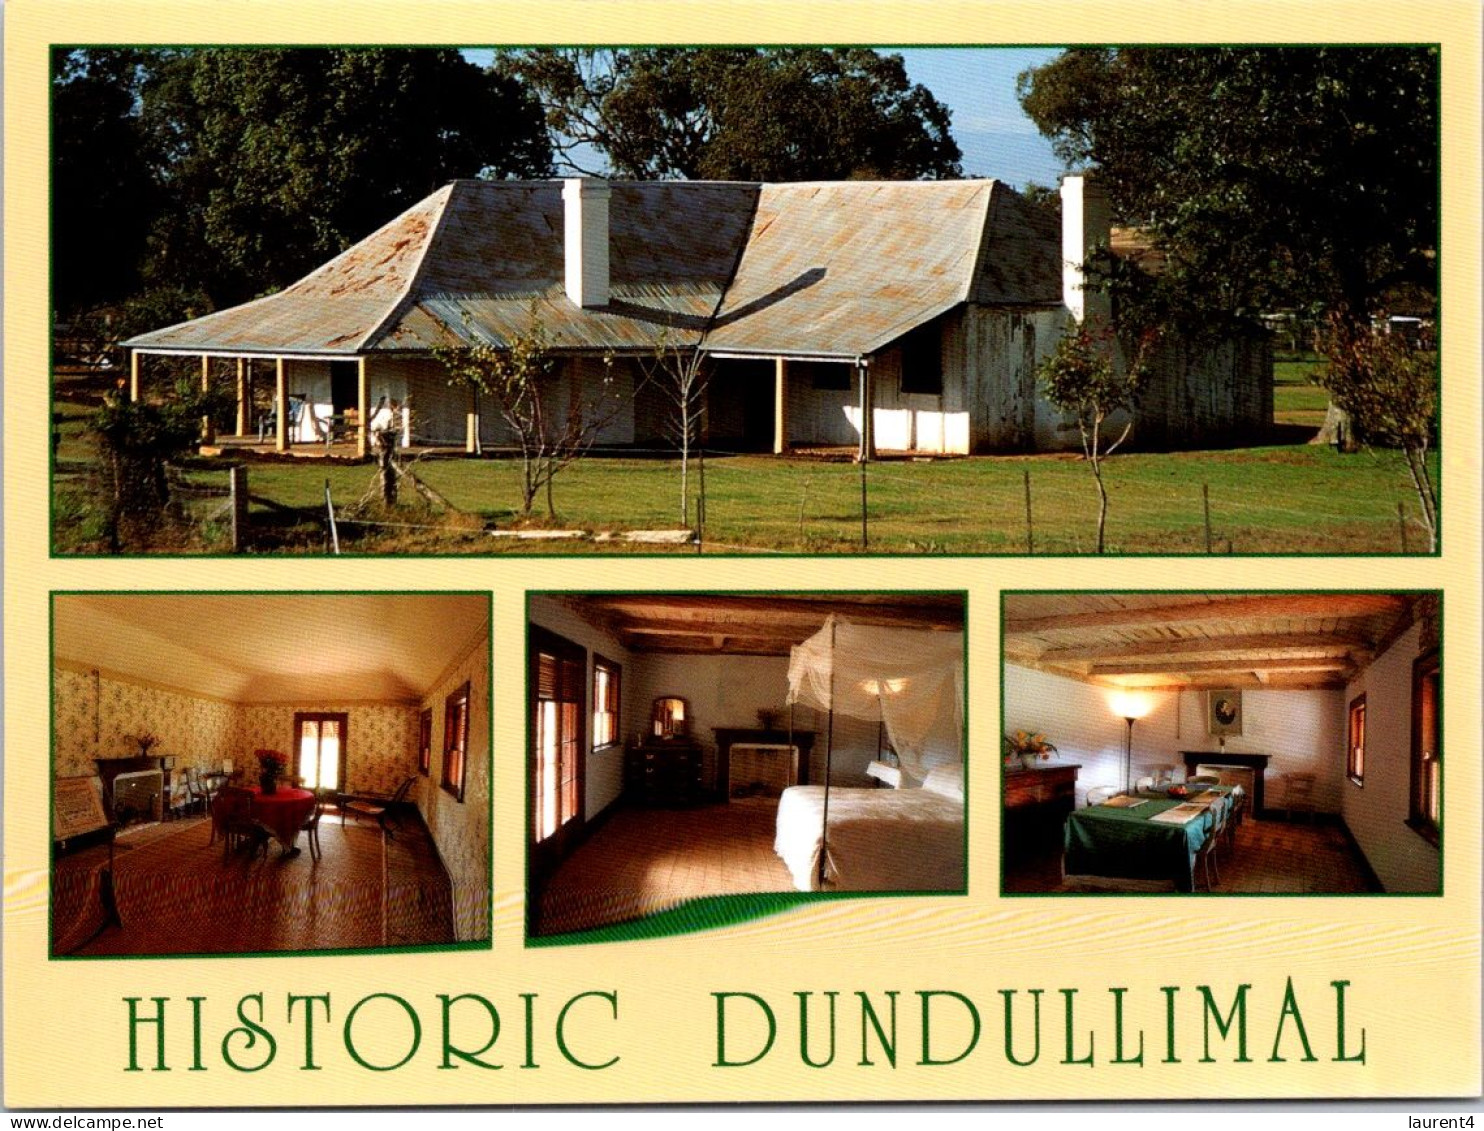 2-9-2023 (4 T 5) Australia - NSW _ Dubbo Historic Dundullimal Slab Homestead - Dubbo